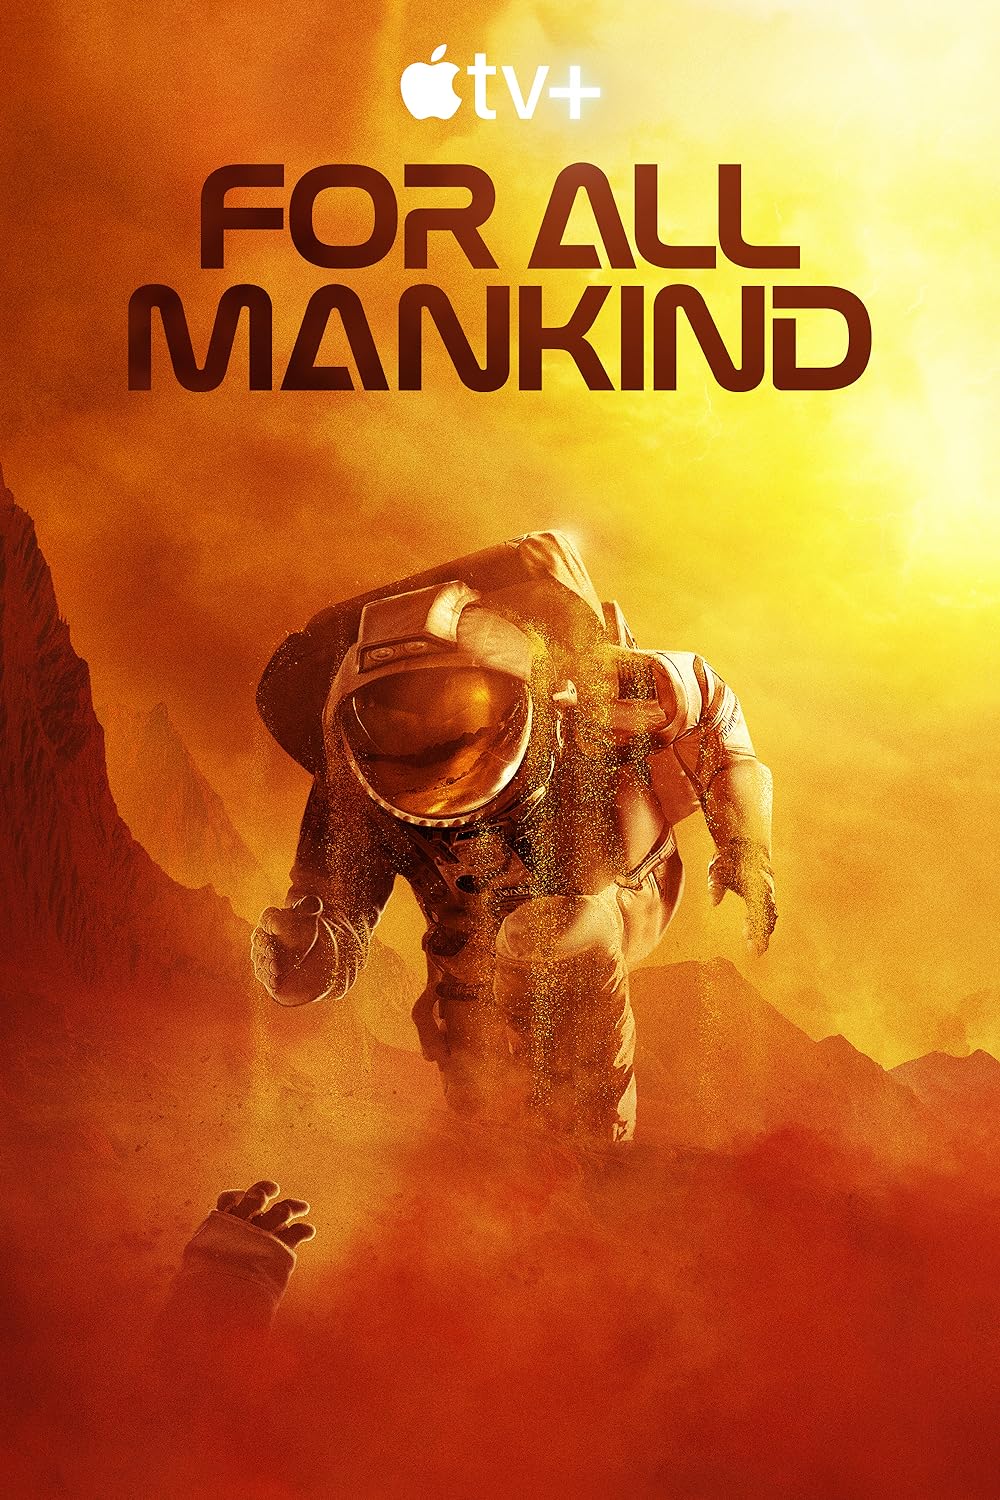 For All Mankind Season 1 DVD Release Date | Redbox, Netflix, iTunes, Amazon